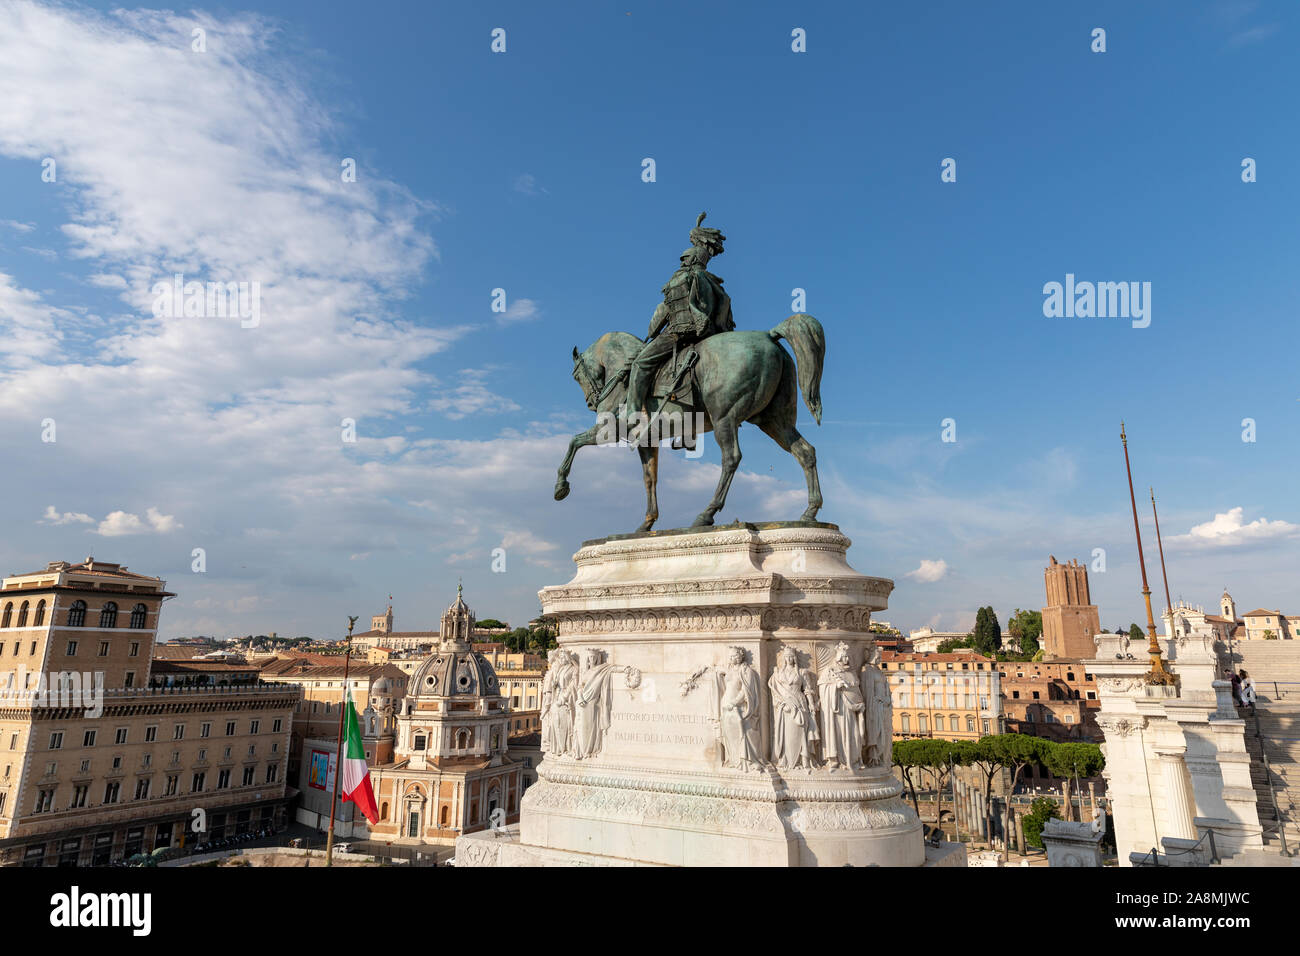 Rome, Italy - June 19, 2018: Equestrian statue of Vittorio Emanuele II at Piazza Venezia in Rome Stock Photo